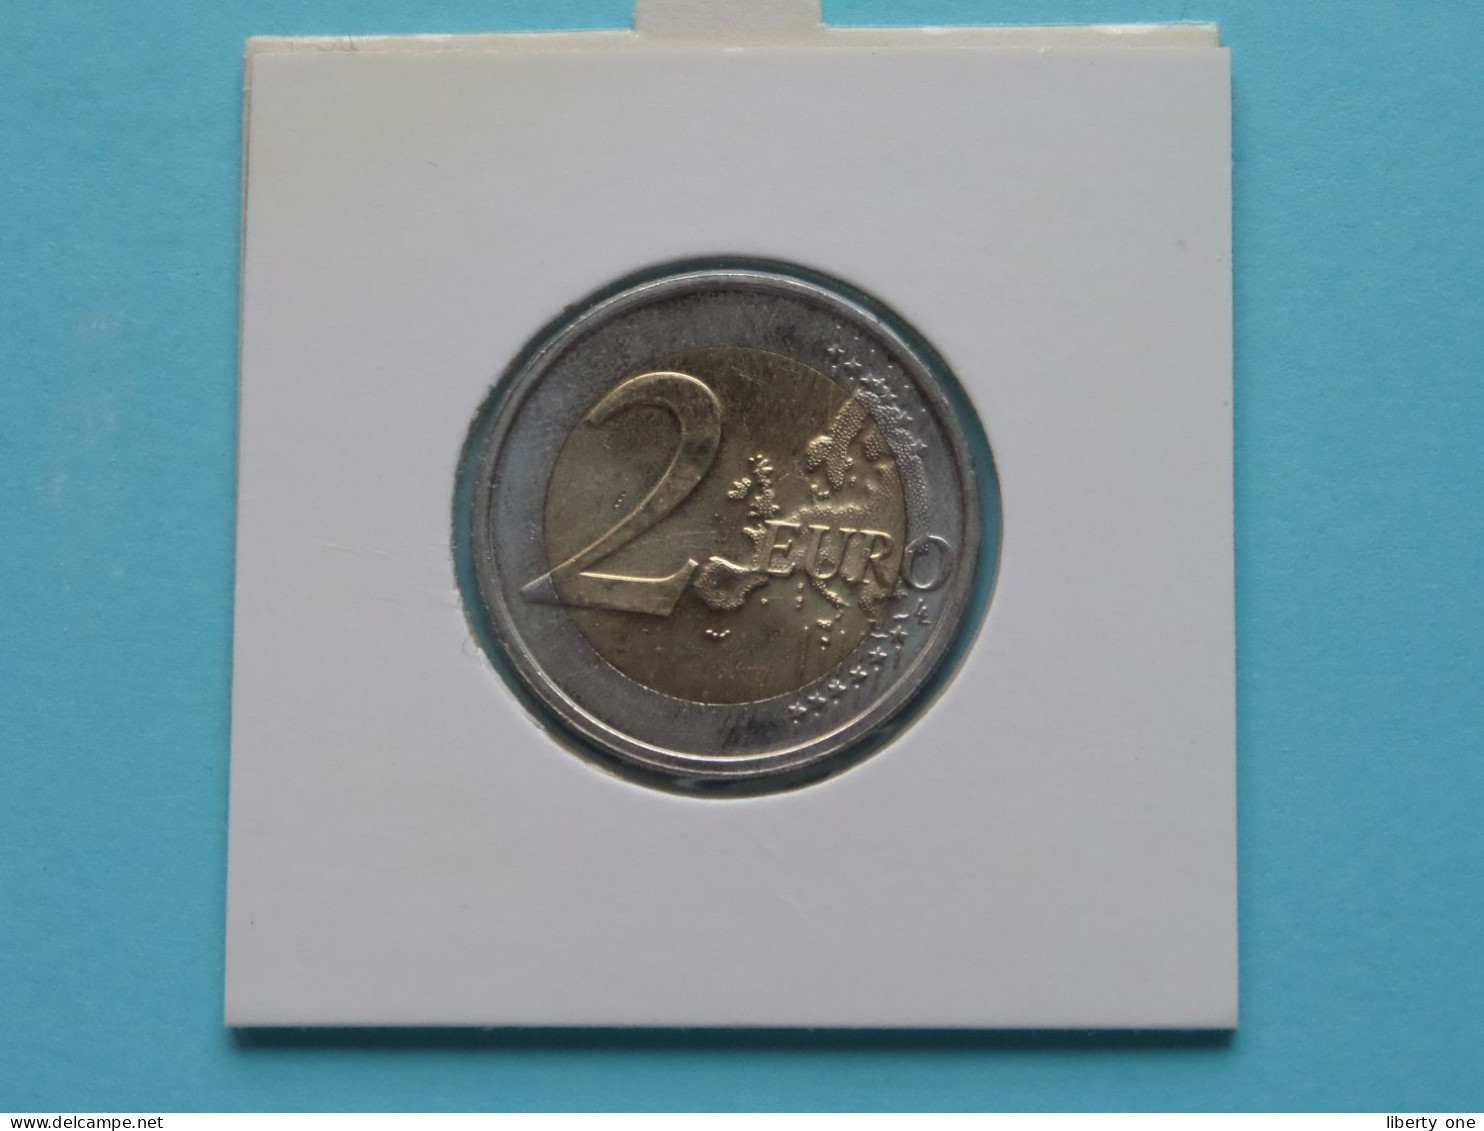 2009 - 2 Euro > 10 Jaar EURO ( Zie / Voir / See > DETAIL > SCANS ) Luxembourg / Letzebuerg ! - Lussemburgo